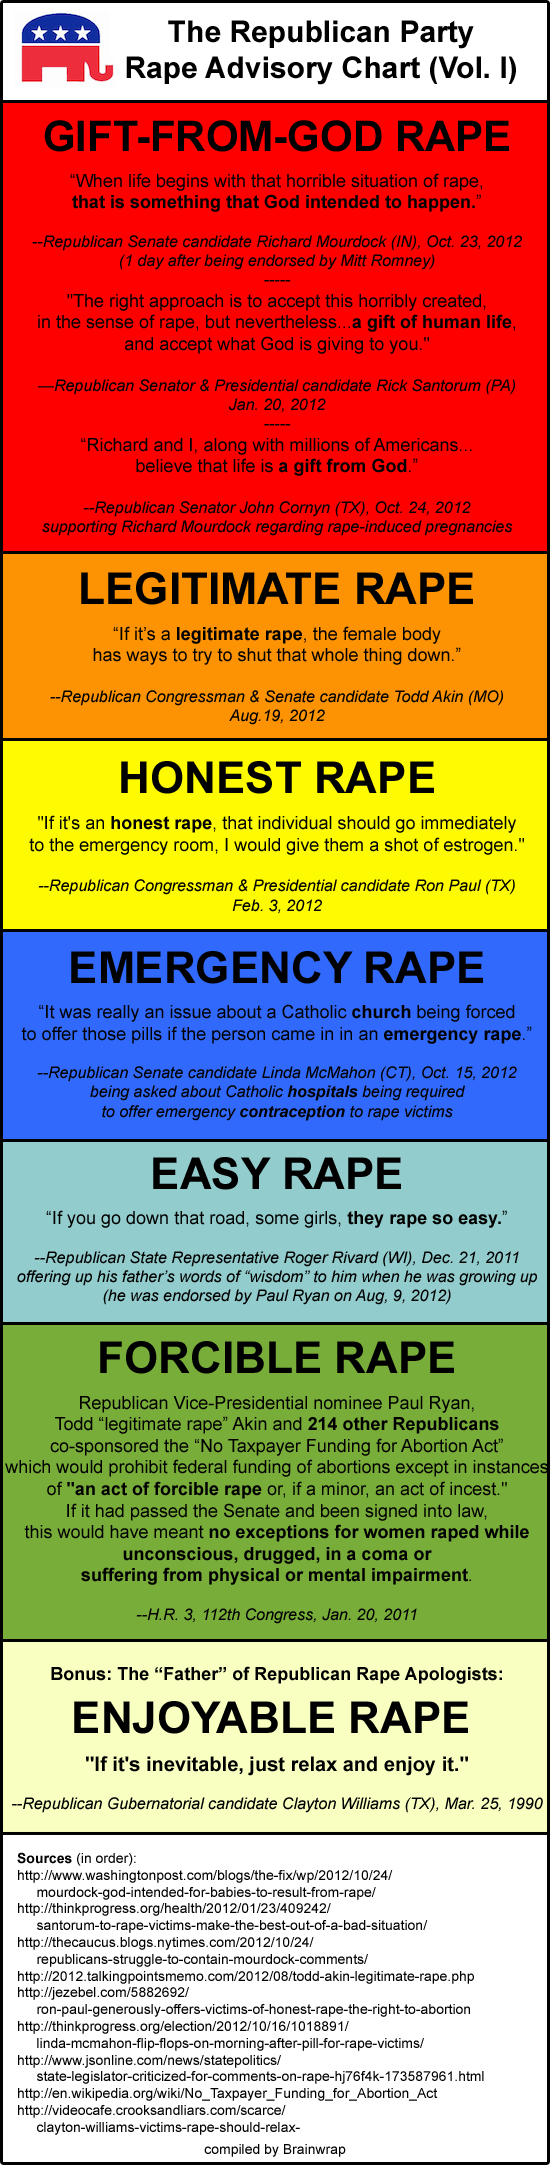 The GOP Rape Advisory Chart